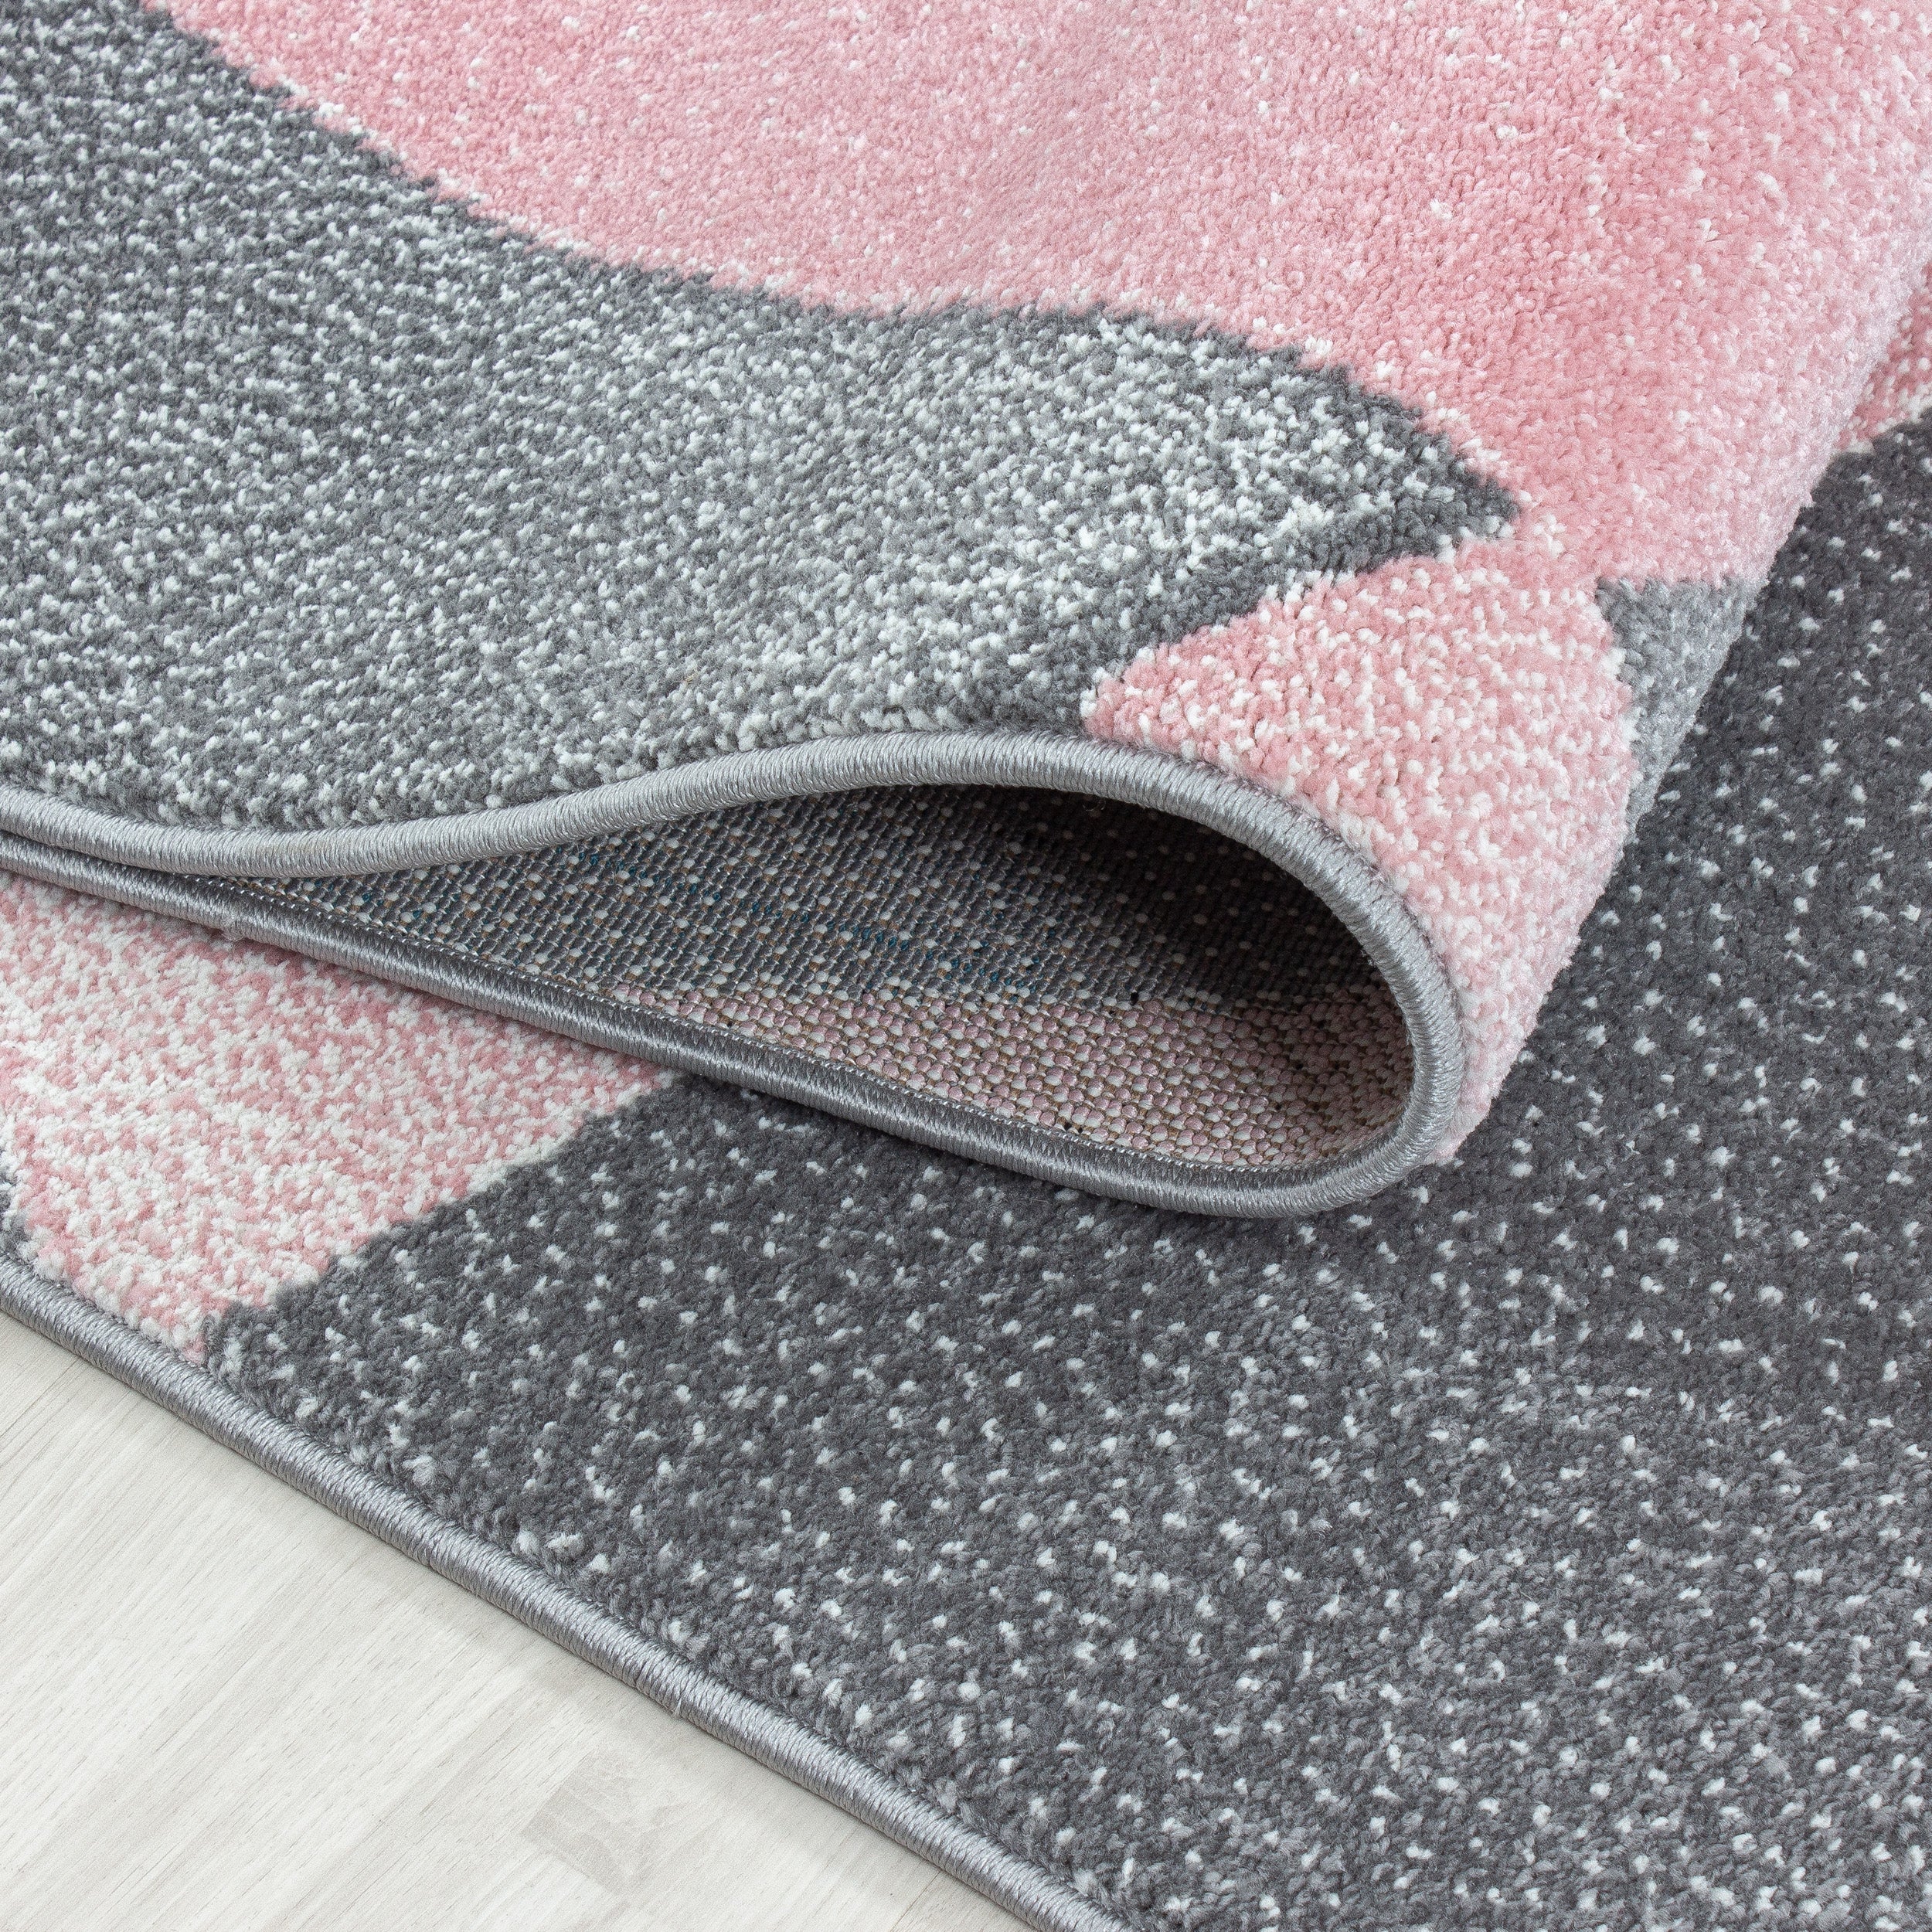 Kurzflor Designer Teppich Abstrakt Gemustert Wohnteppich Grau Rosa Weiss Meliert